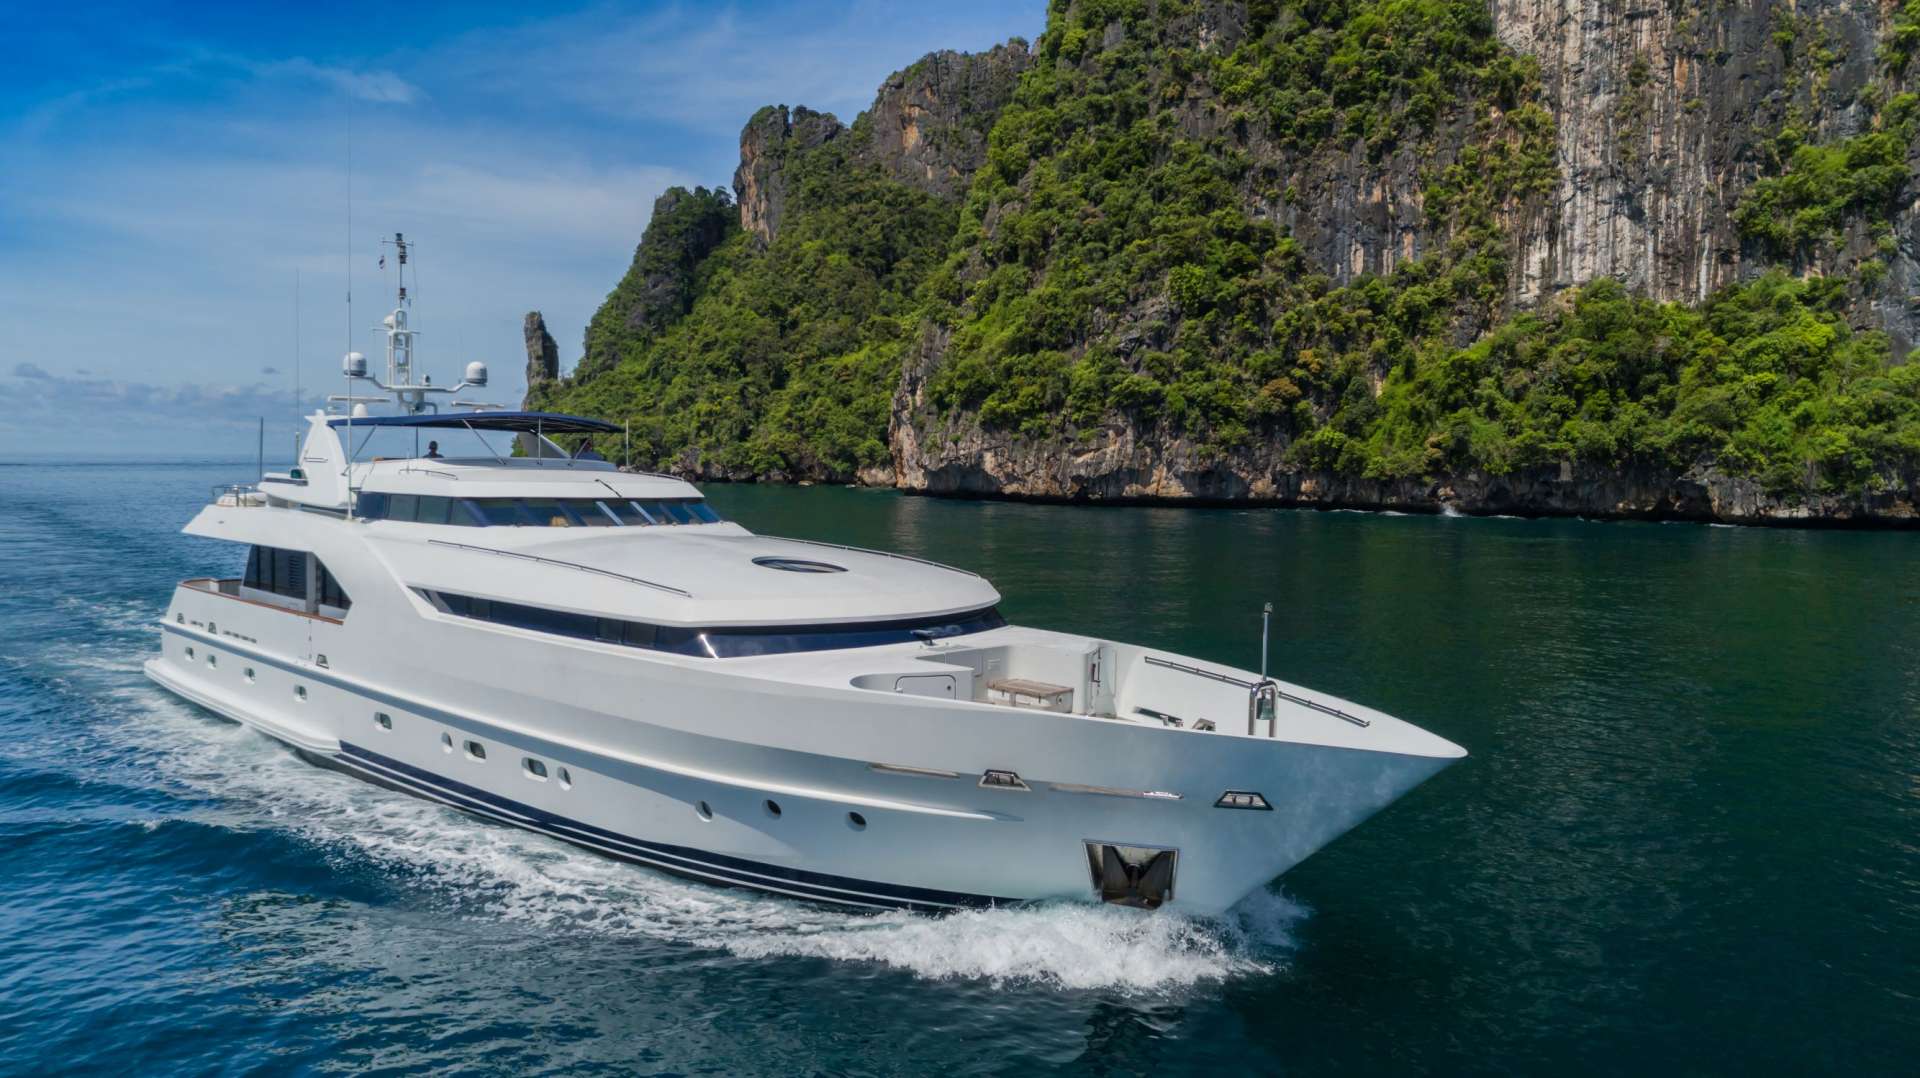 xanadu of london - Luxury yacht charter Thailand & Boat hire in SE Asia 1